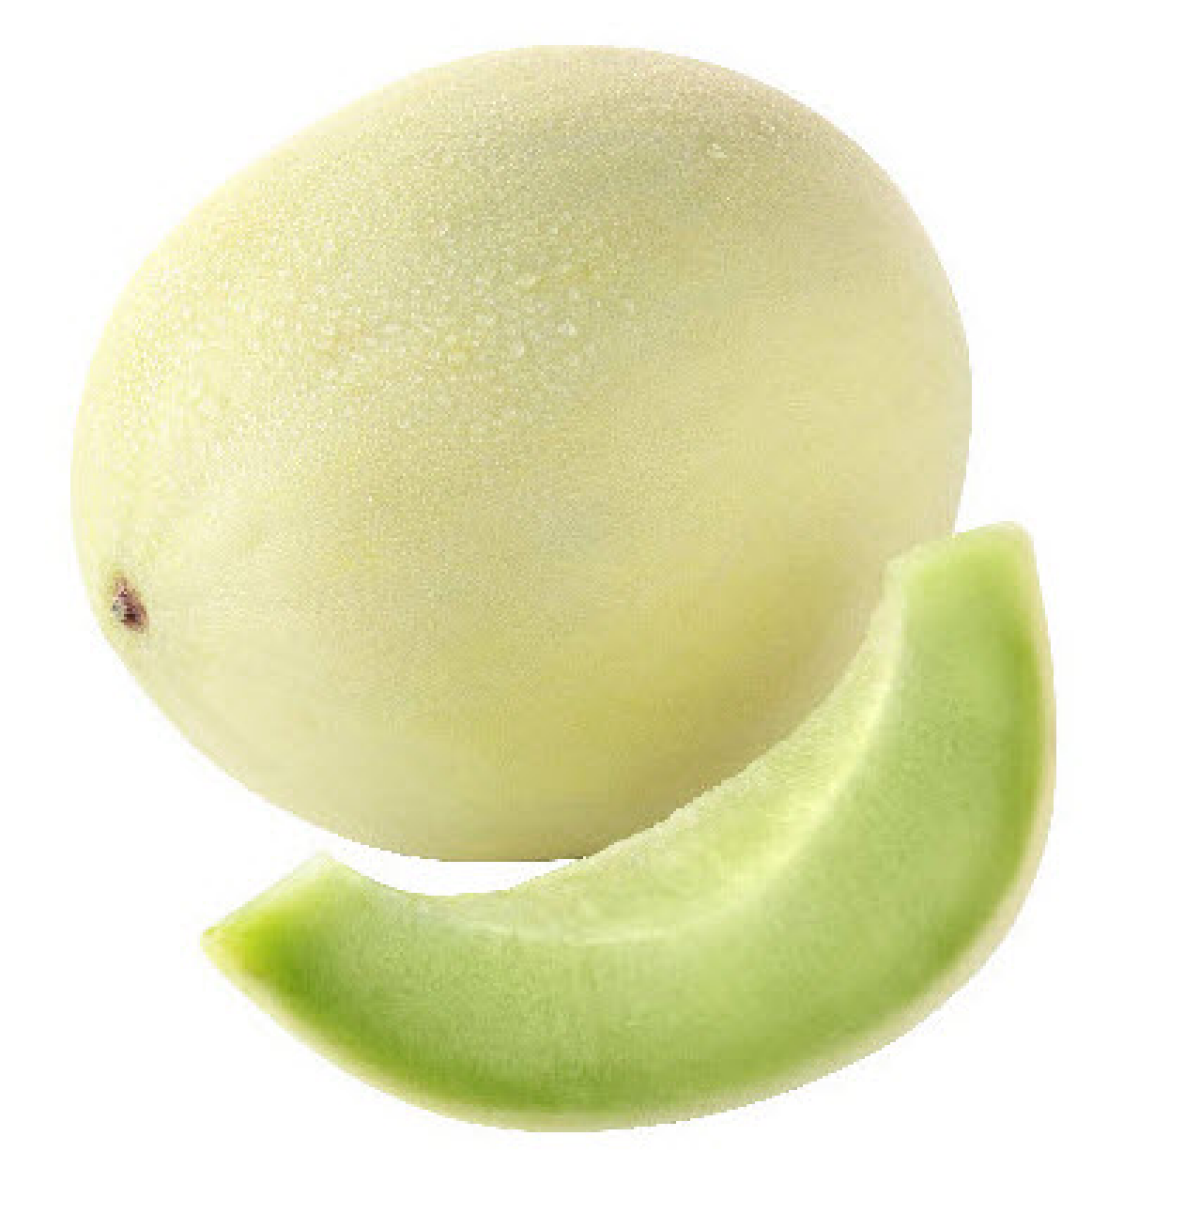 Honeydew Melon, 1 ct.